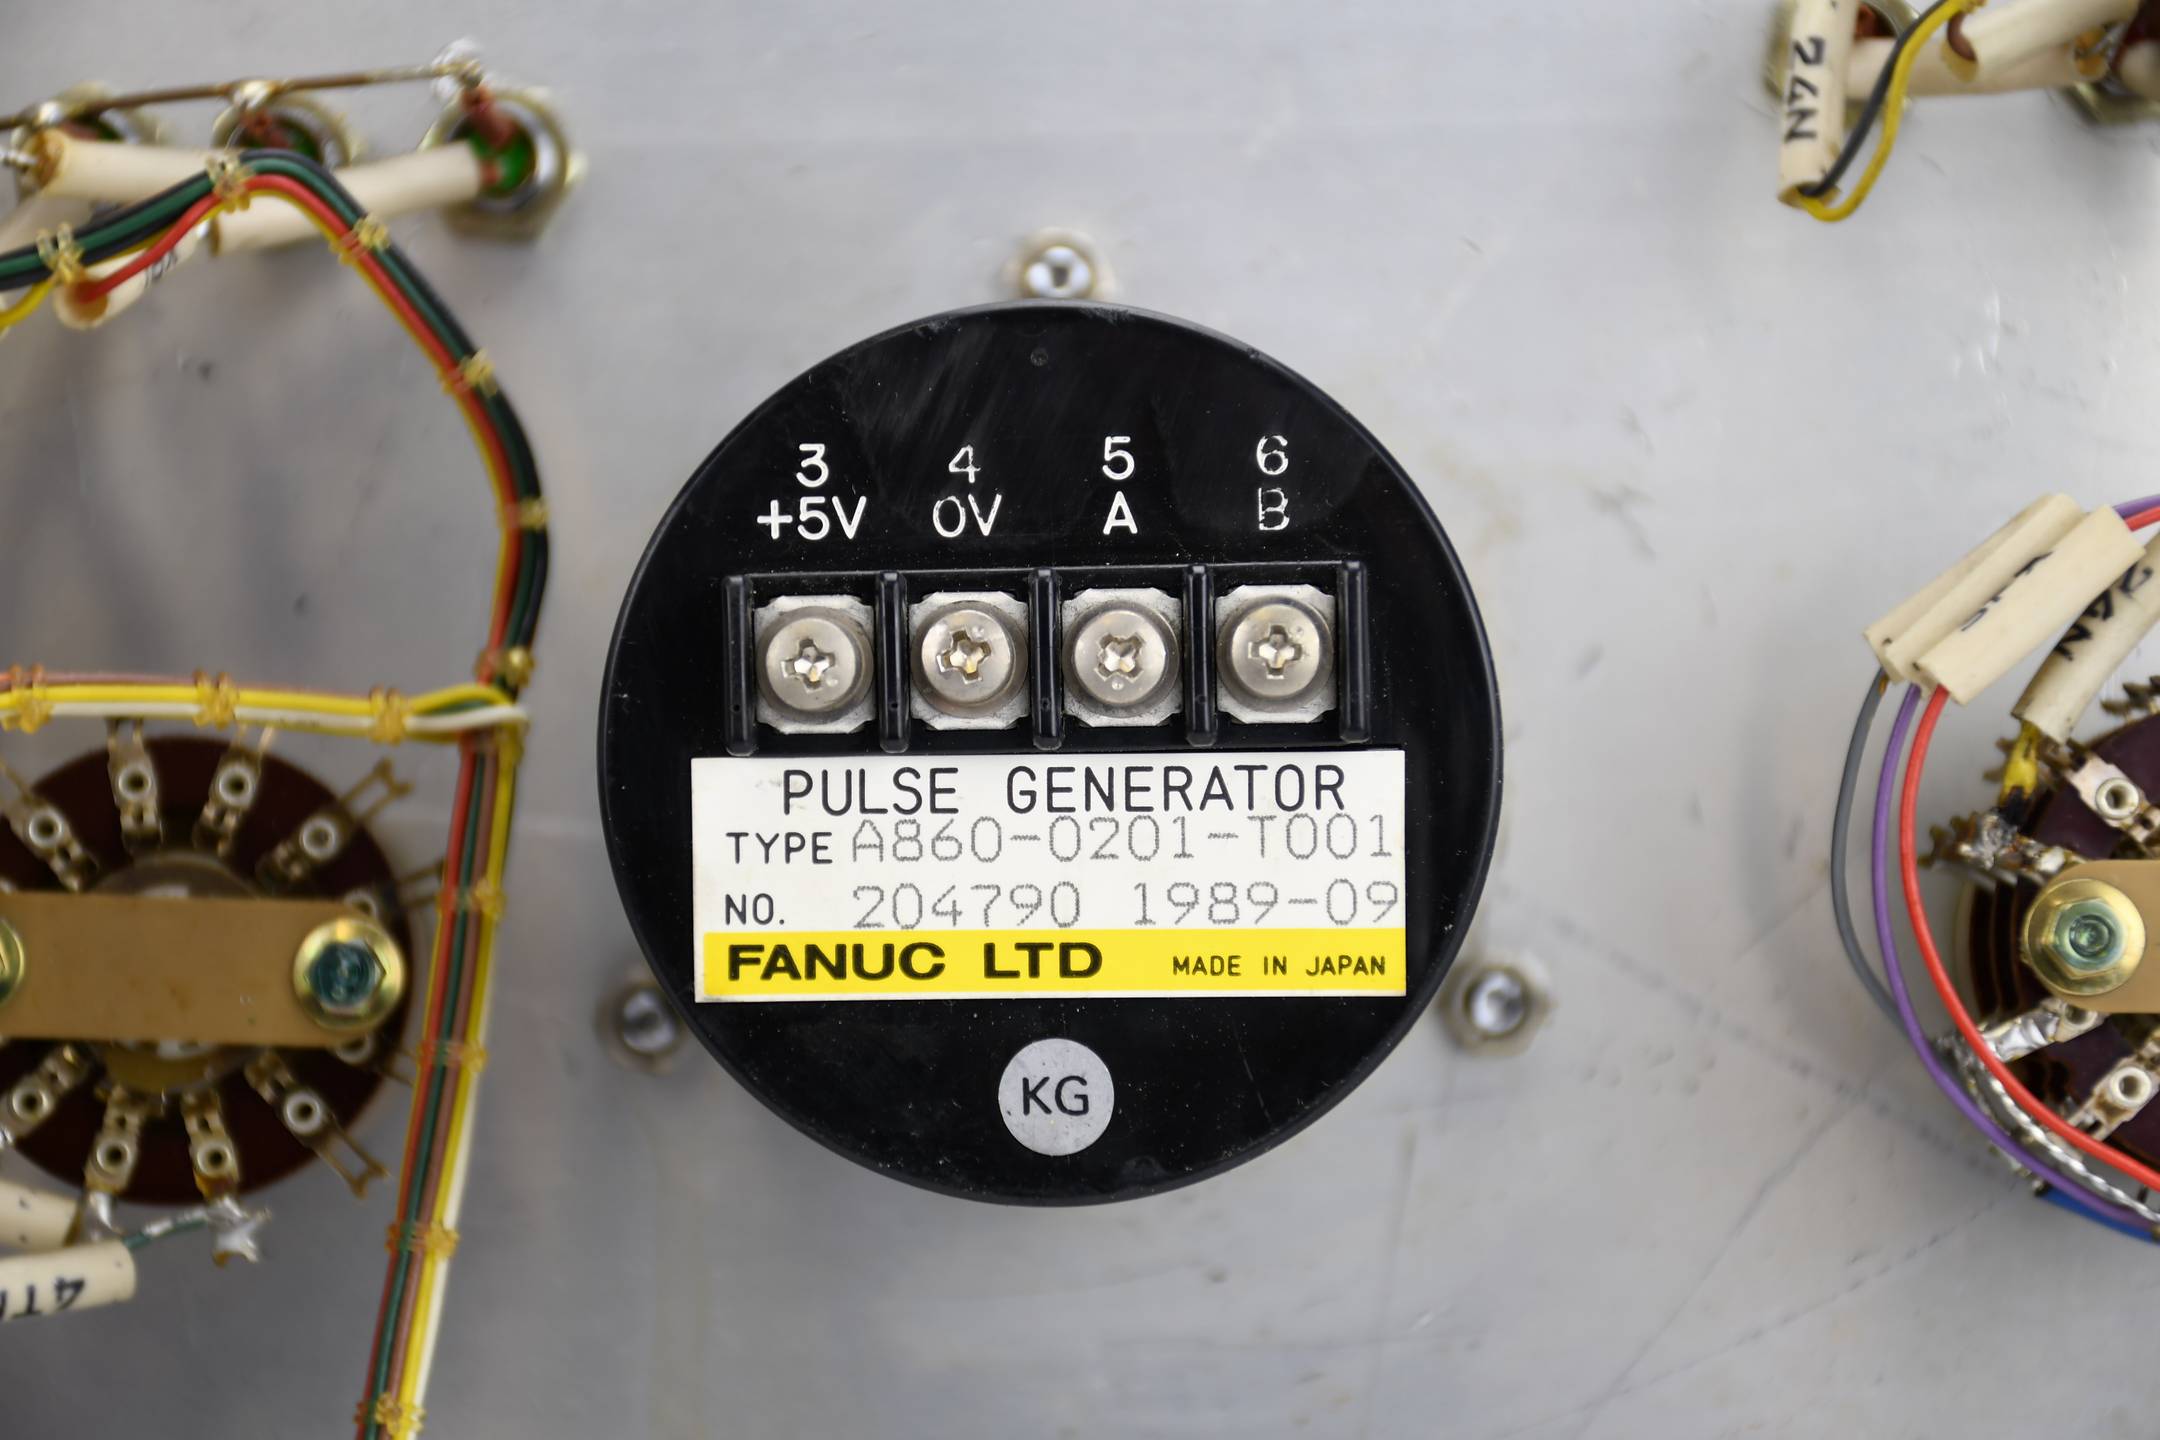 Fanuc LTD. Operator panel inkl. pulse generator A860-0201-T001